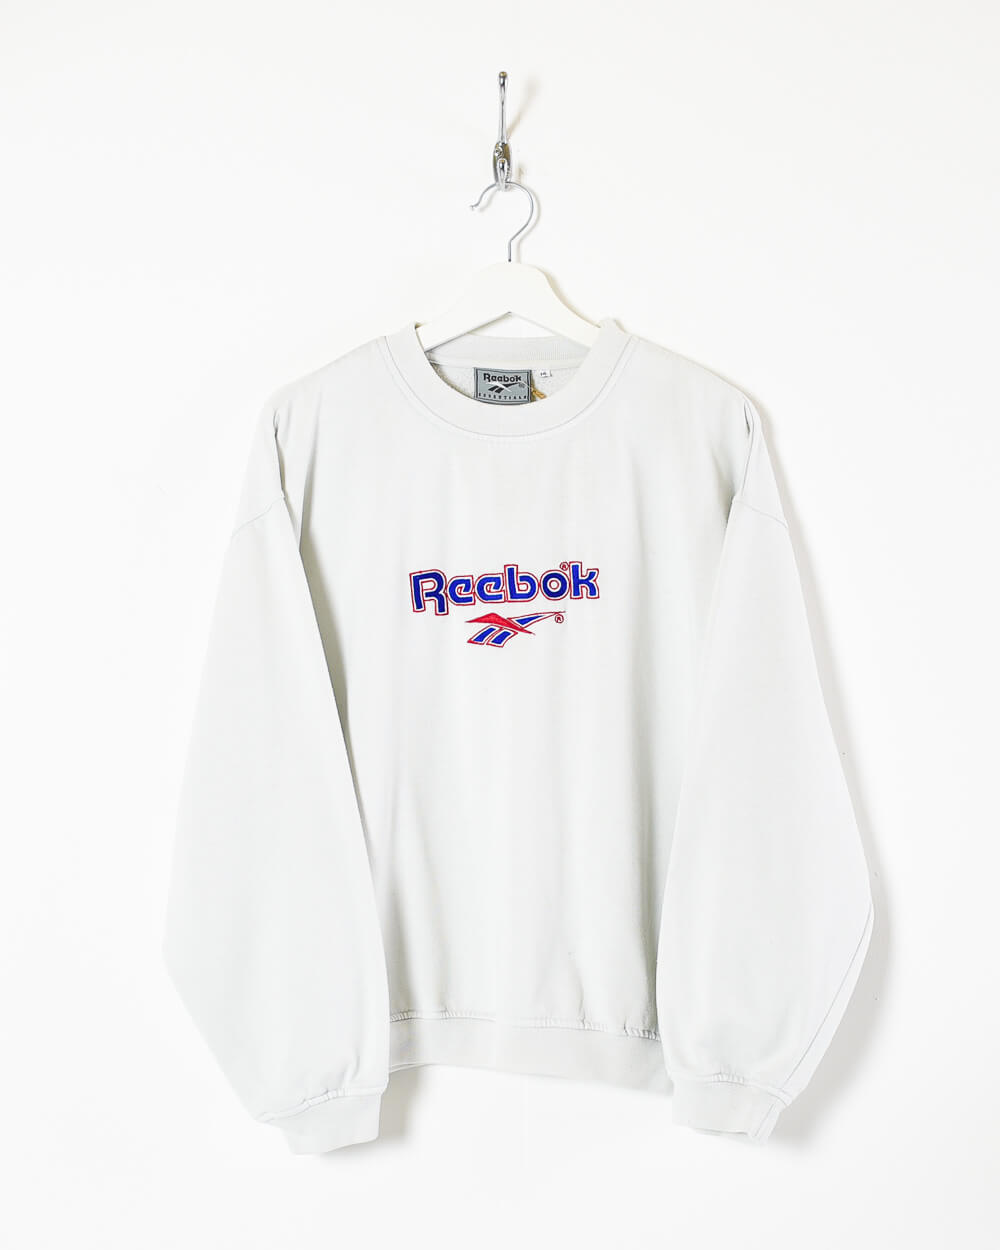 White Reebok Women's Sweatshirt - Large